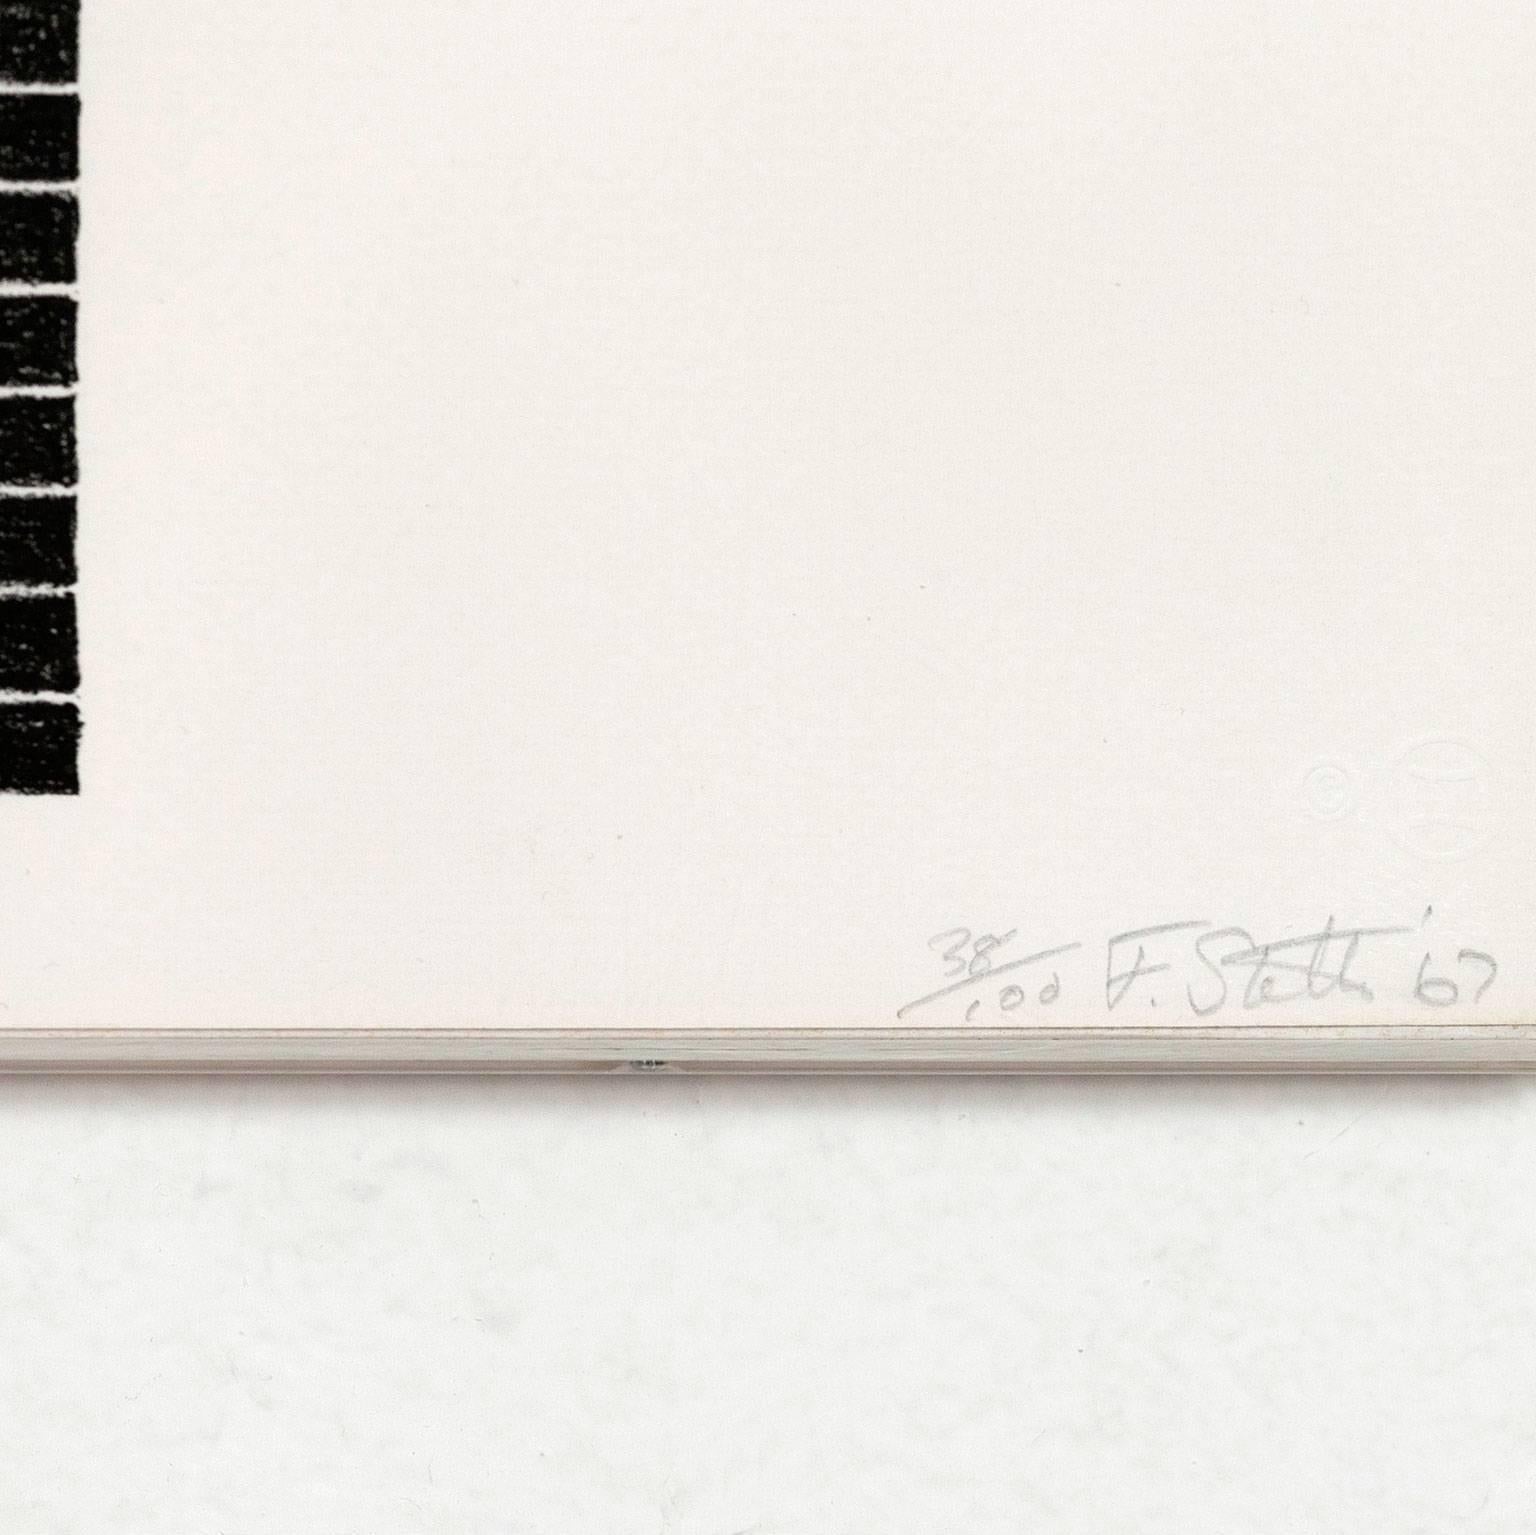 Frank Stella became a printmaker in 1967 - 